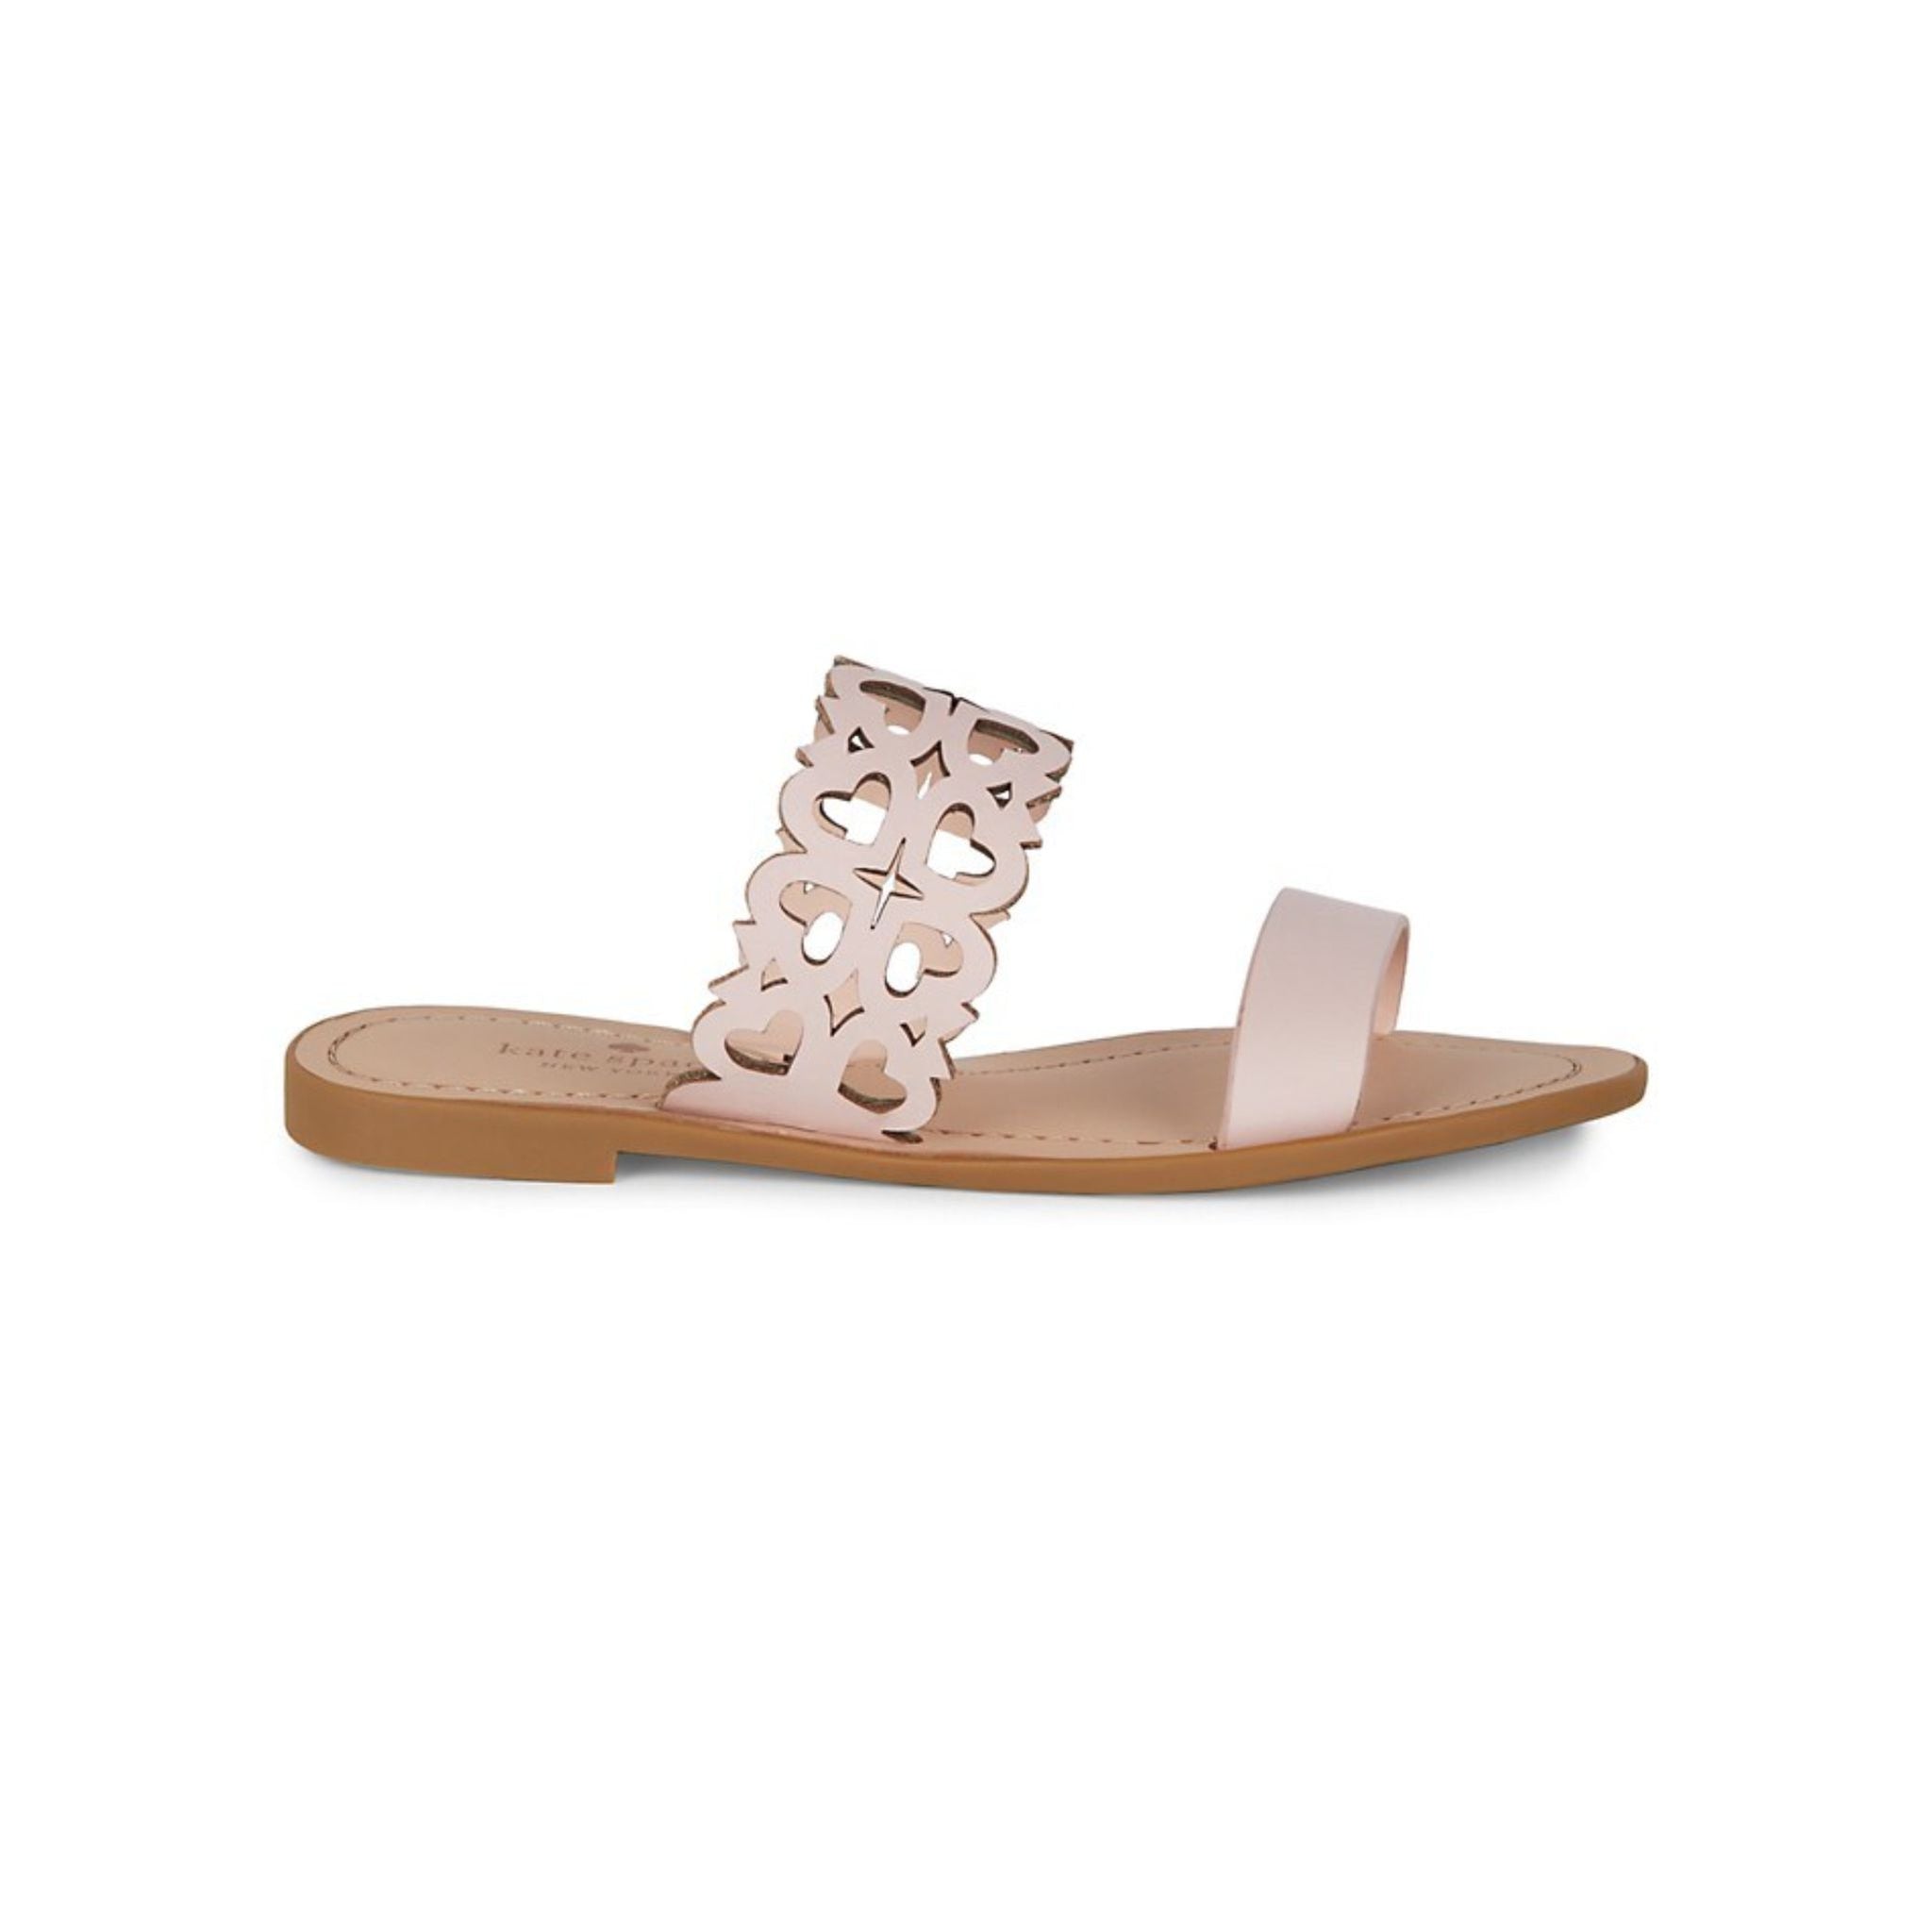 Kate Spade New York Ambrosia Flat Cutout Leather Sandals - Tutu Pink